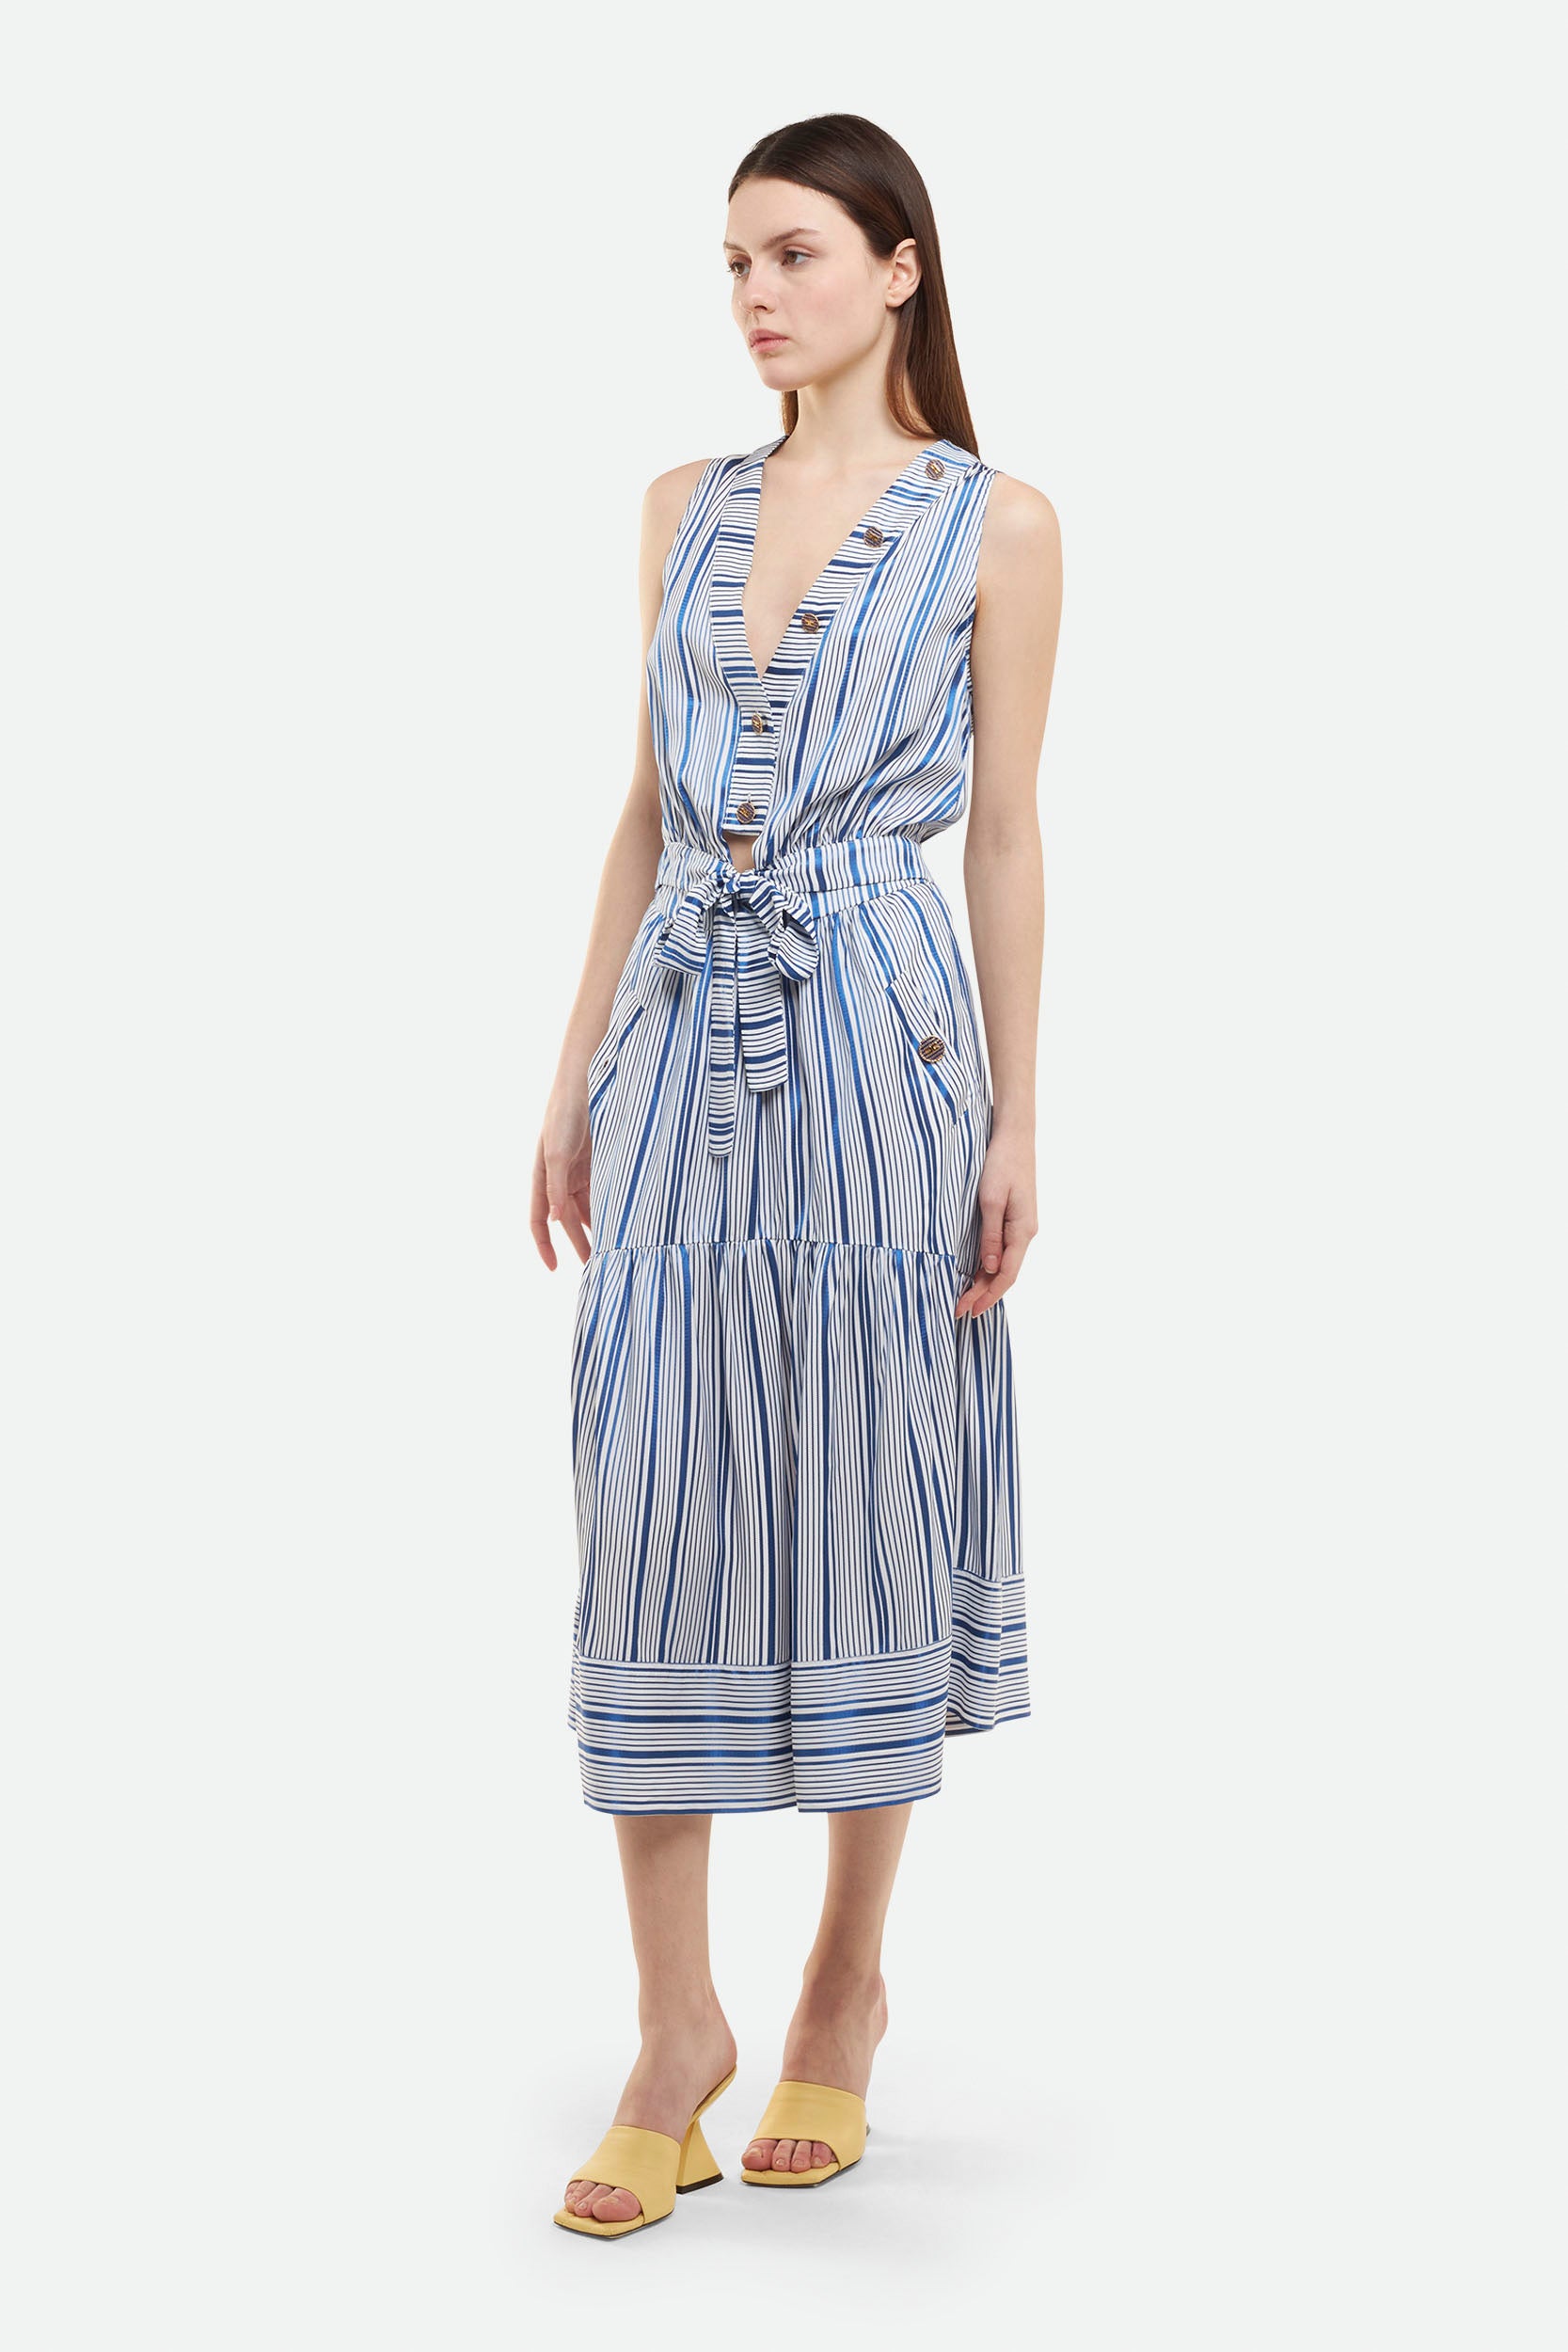 Elisabetta Franchi Blue and White Shirt Dress